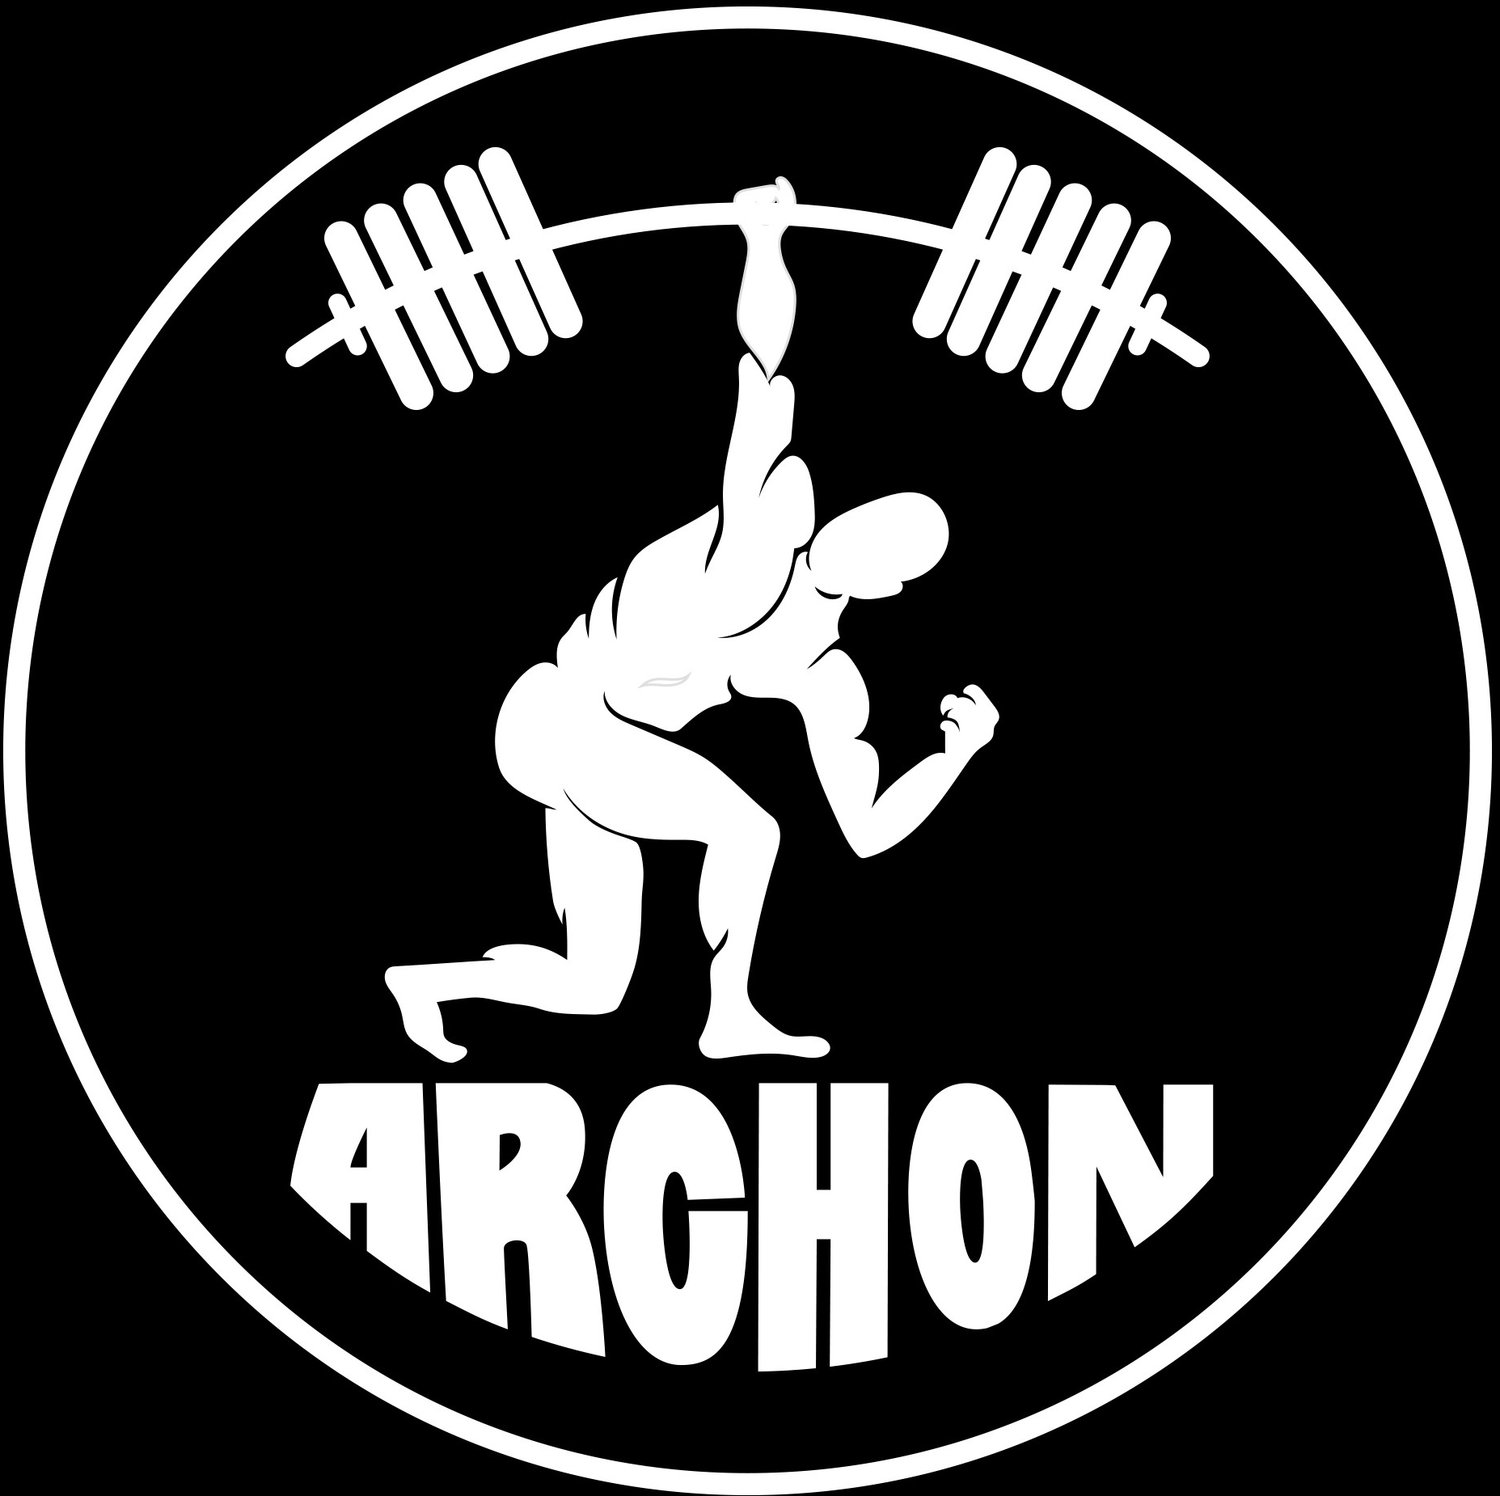 CrossFit Archon